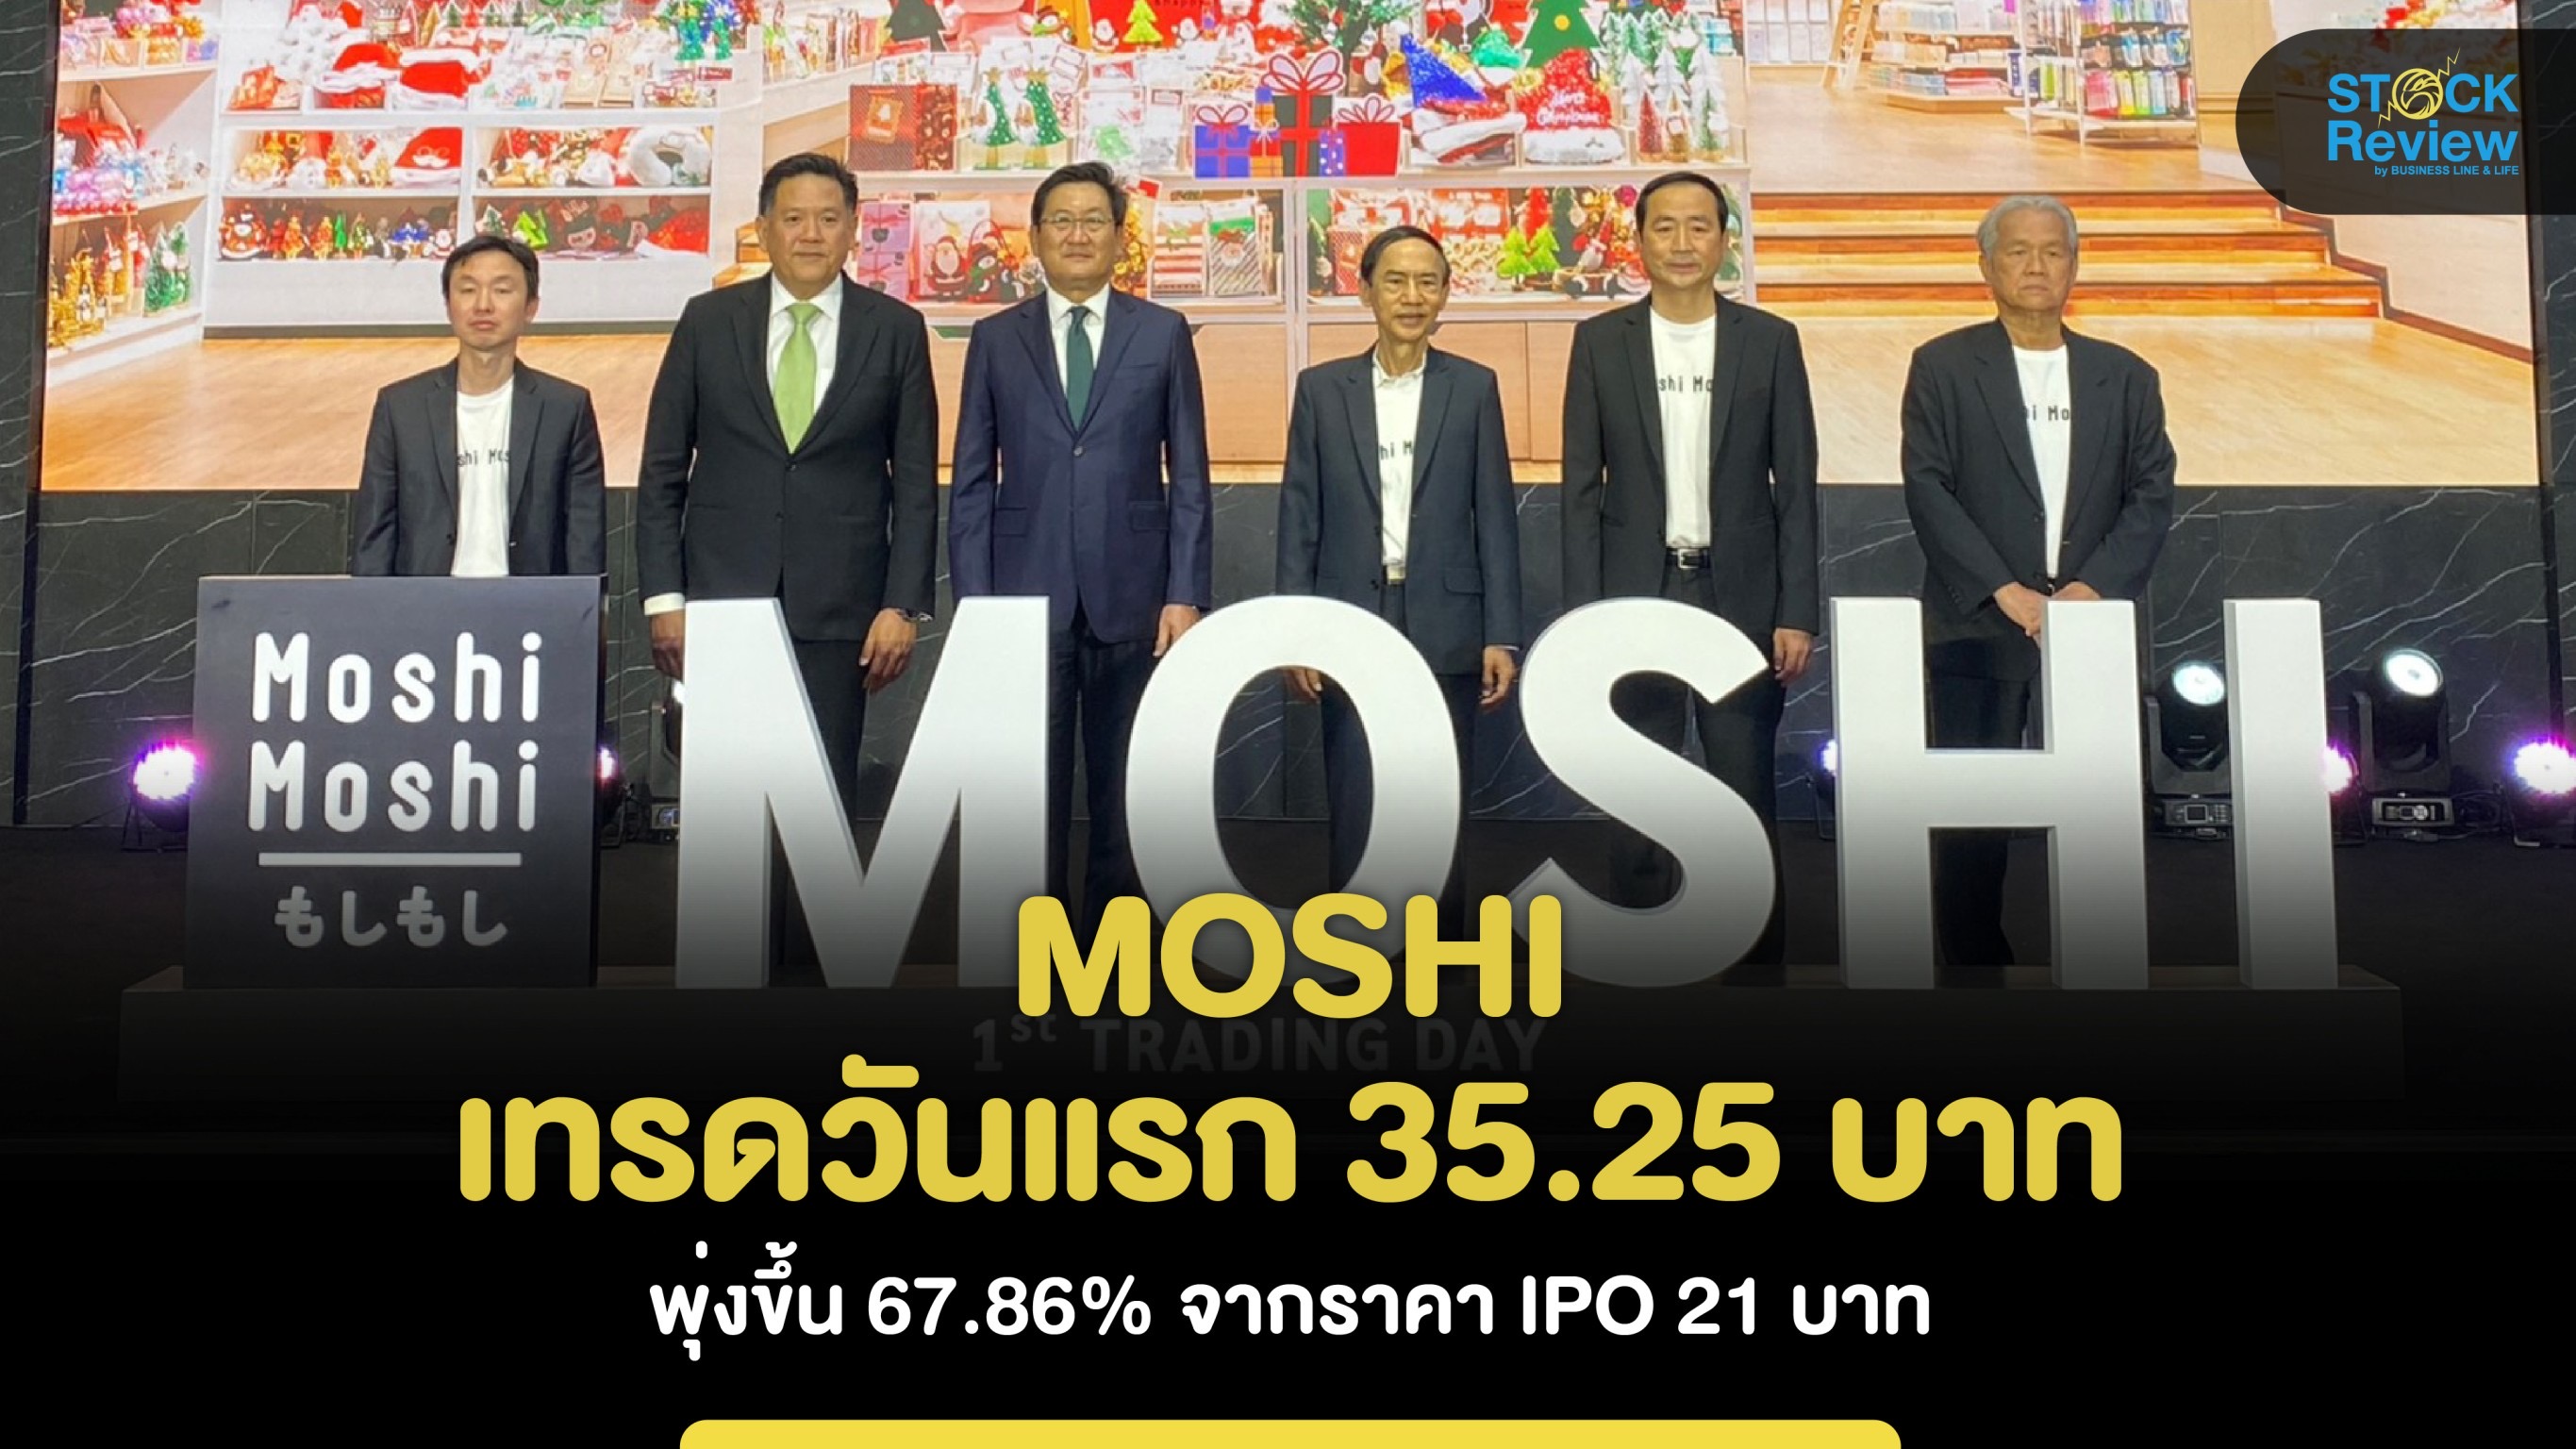 MOSHI เทรดวันแรก 35.25 บาท พุ่งขึ้น 67.86% จากราคา IPO 21 บาท ปลื้มกระแสตอบรับดี รุกขยายสาขาเพิ่มเป็น 165 สาขา ภายในปี 68